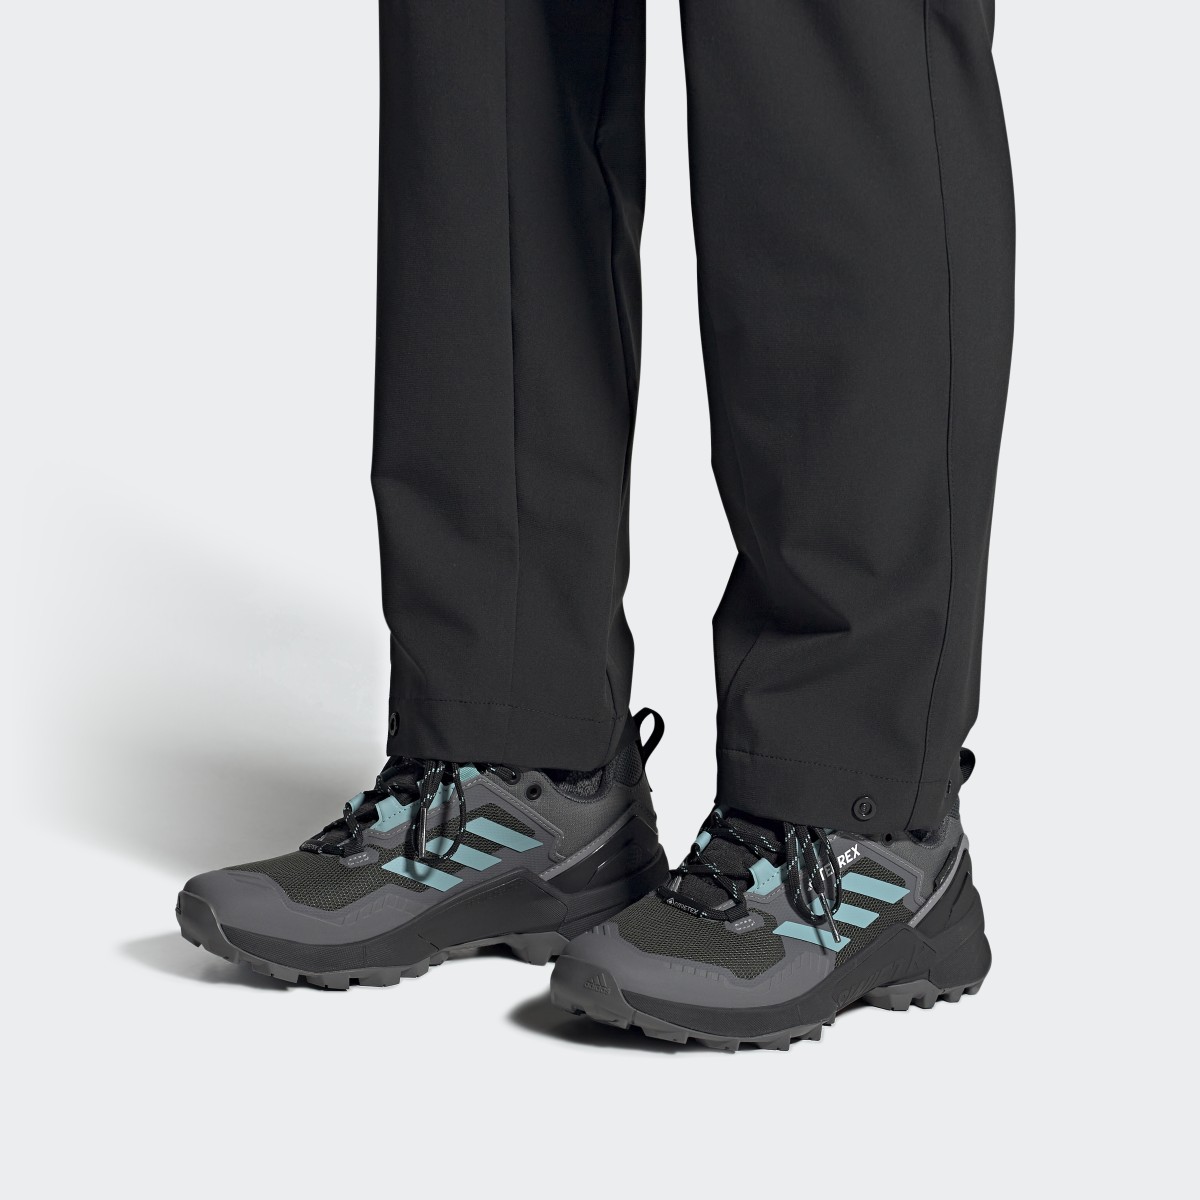 Adidas TERREX Swift R3 GORE-TEX Hiking Shoes. 5